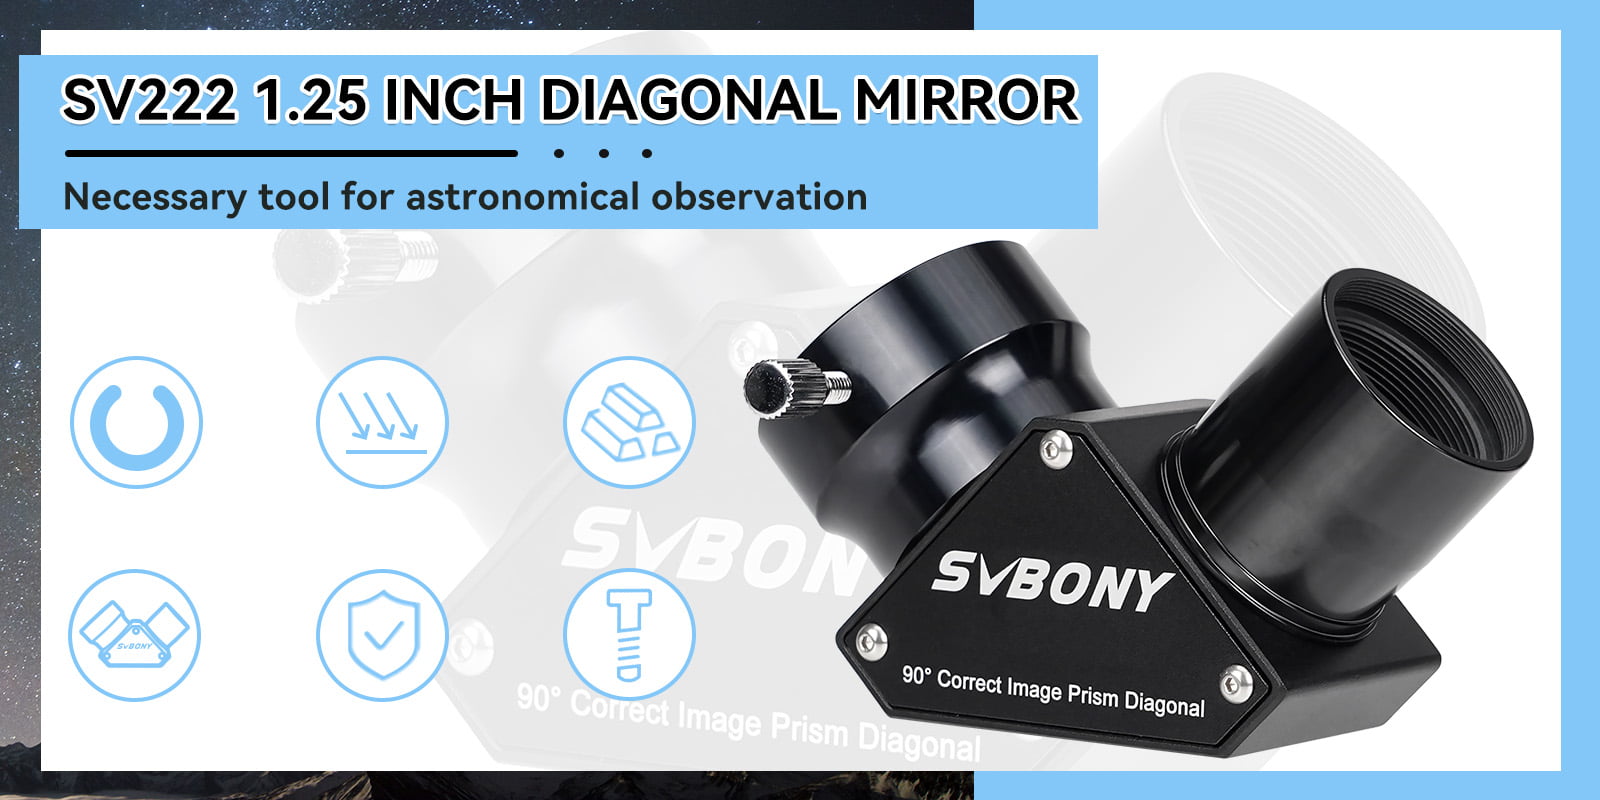 sv222 diagonal mirror 10.jpg